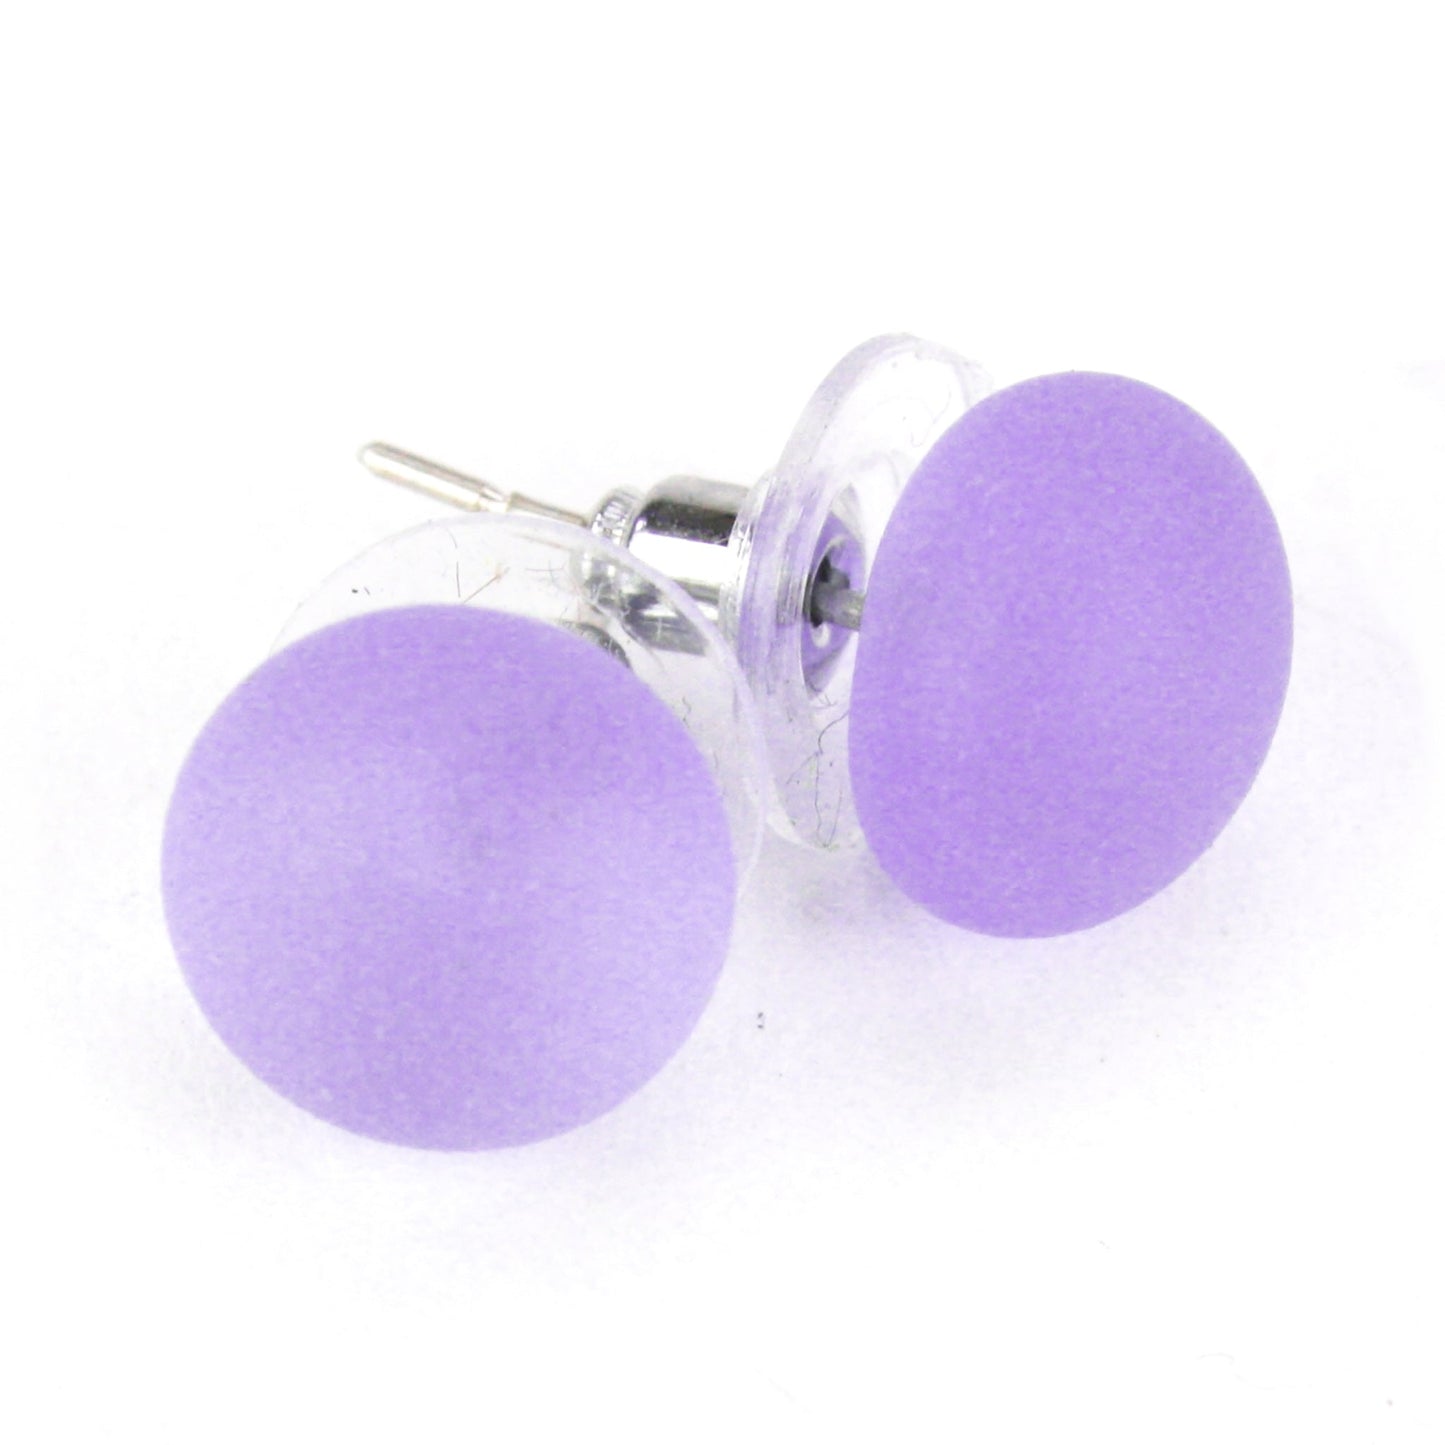 Small studs -purple change color